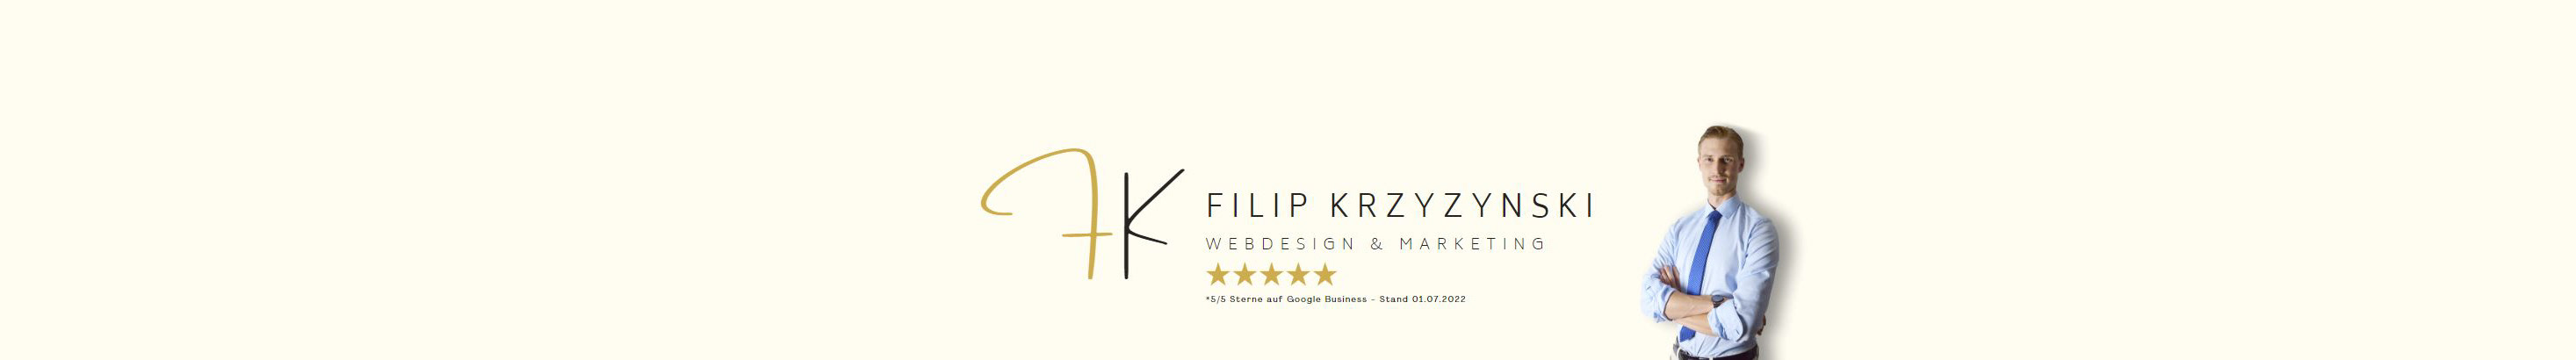 Filip Krzyzynski's profile banner